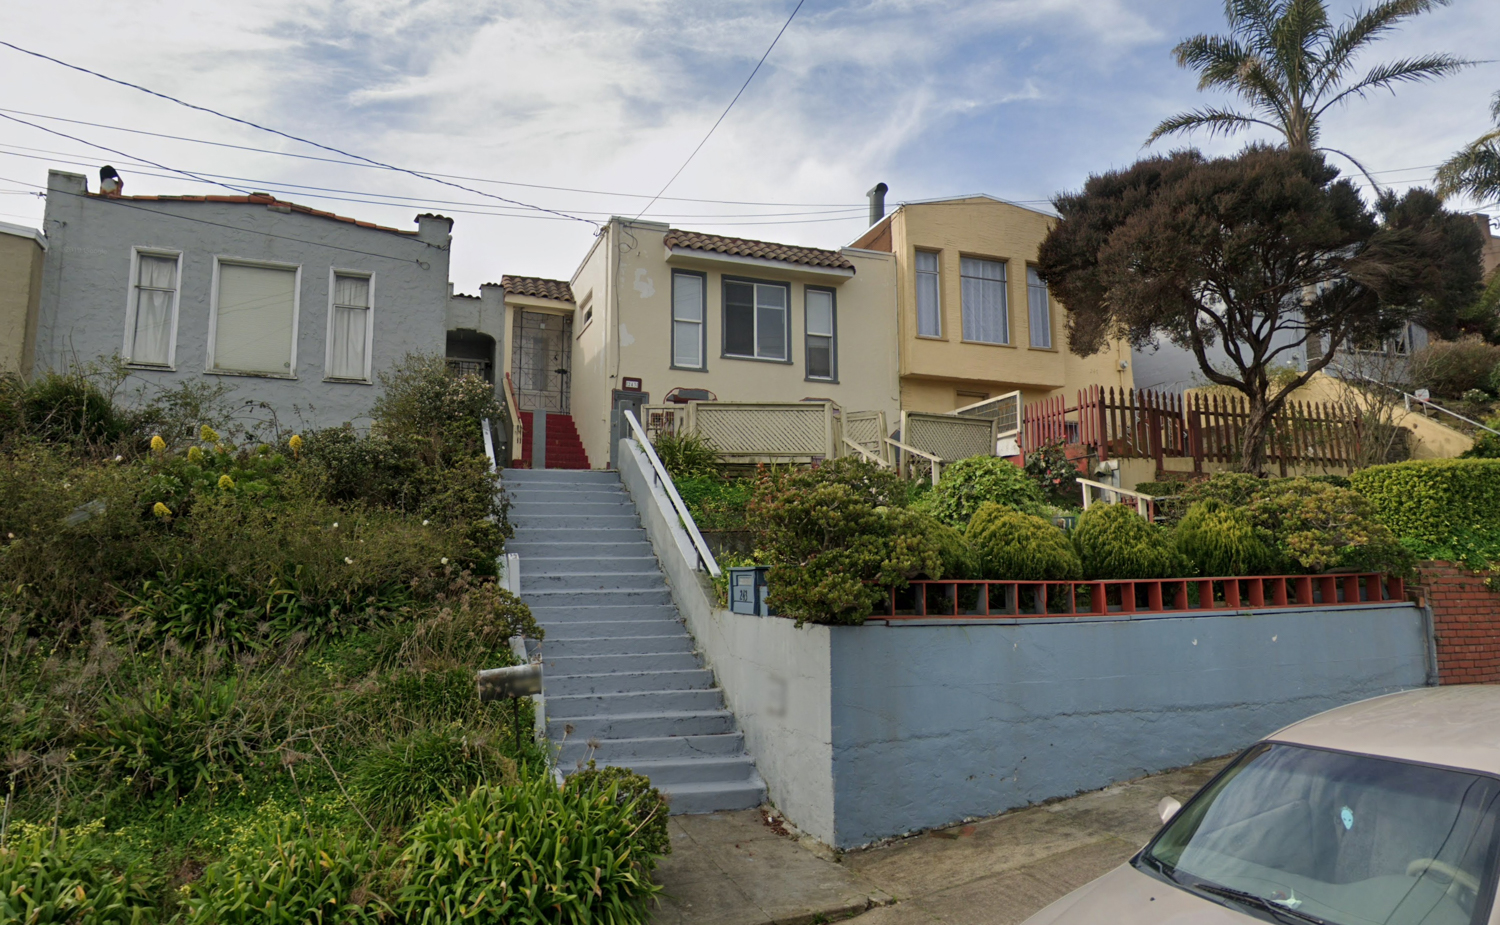 243 Staples Avenue existing condition, image via Google Street View